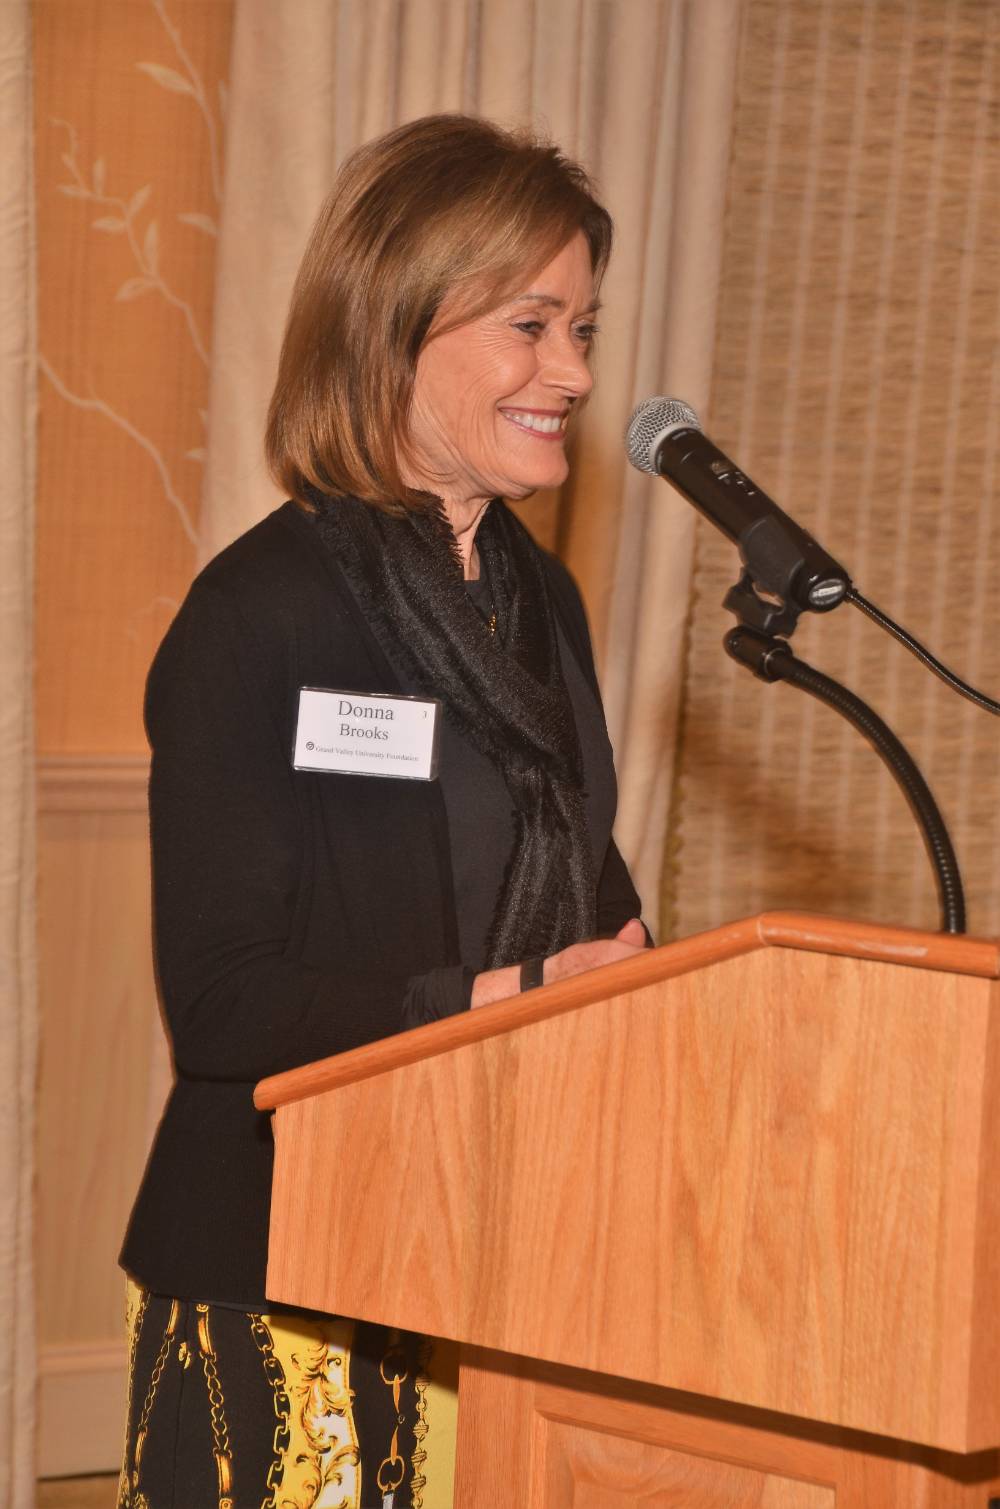 Donna Brooks speaking at a podium.